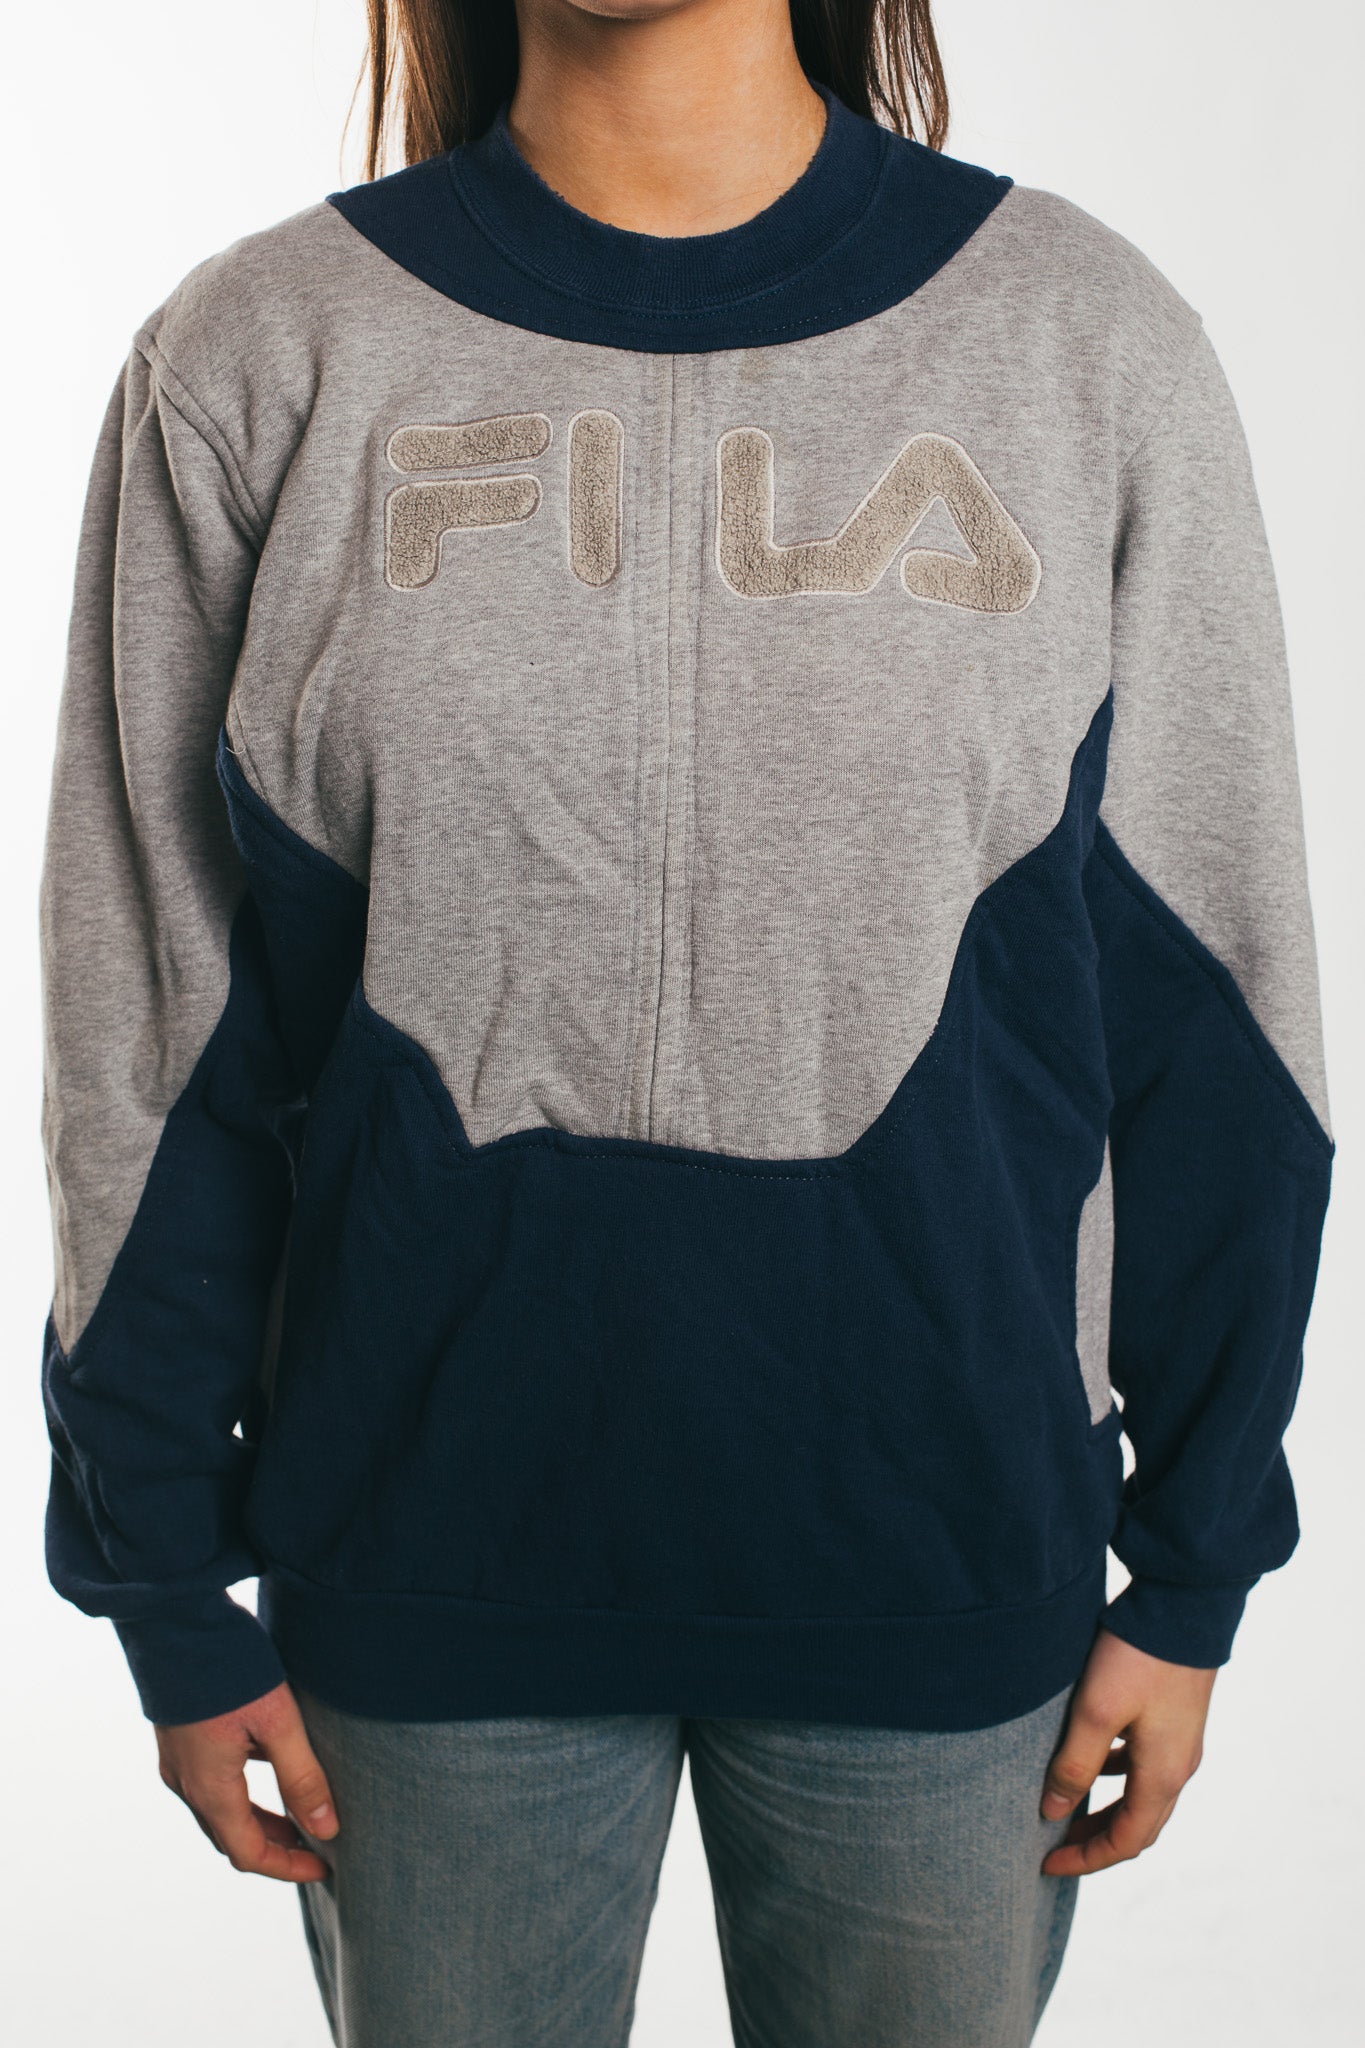 Fila - Sweatshirt (S)